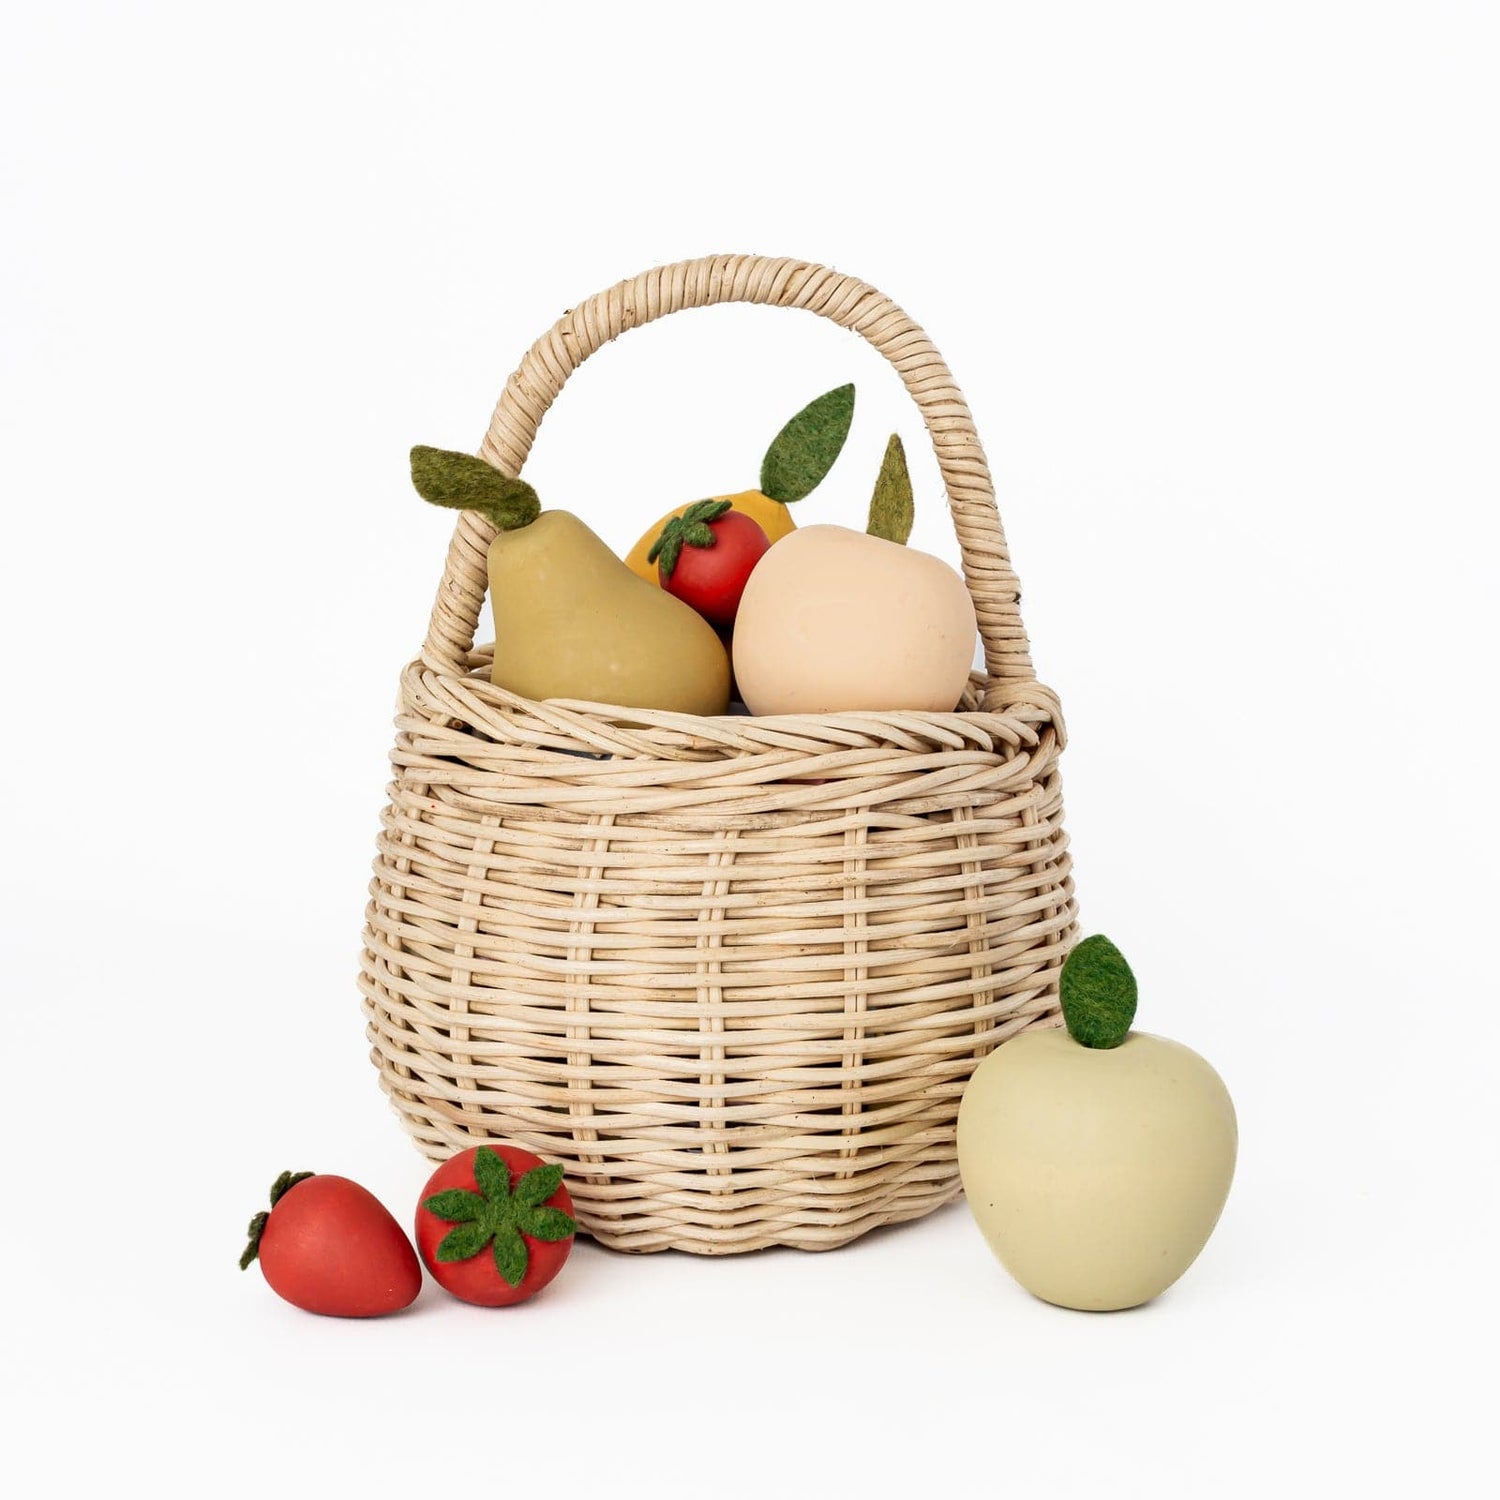 Olli Ella Rattan Rattan Berry Basket (Straw) by Olli Ella Olli Ella Rattan Berry Basket I Rattan Nursery Decor